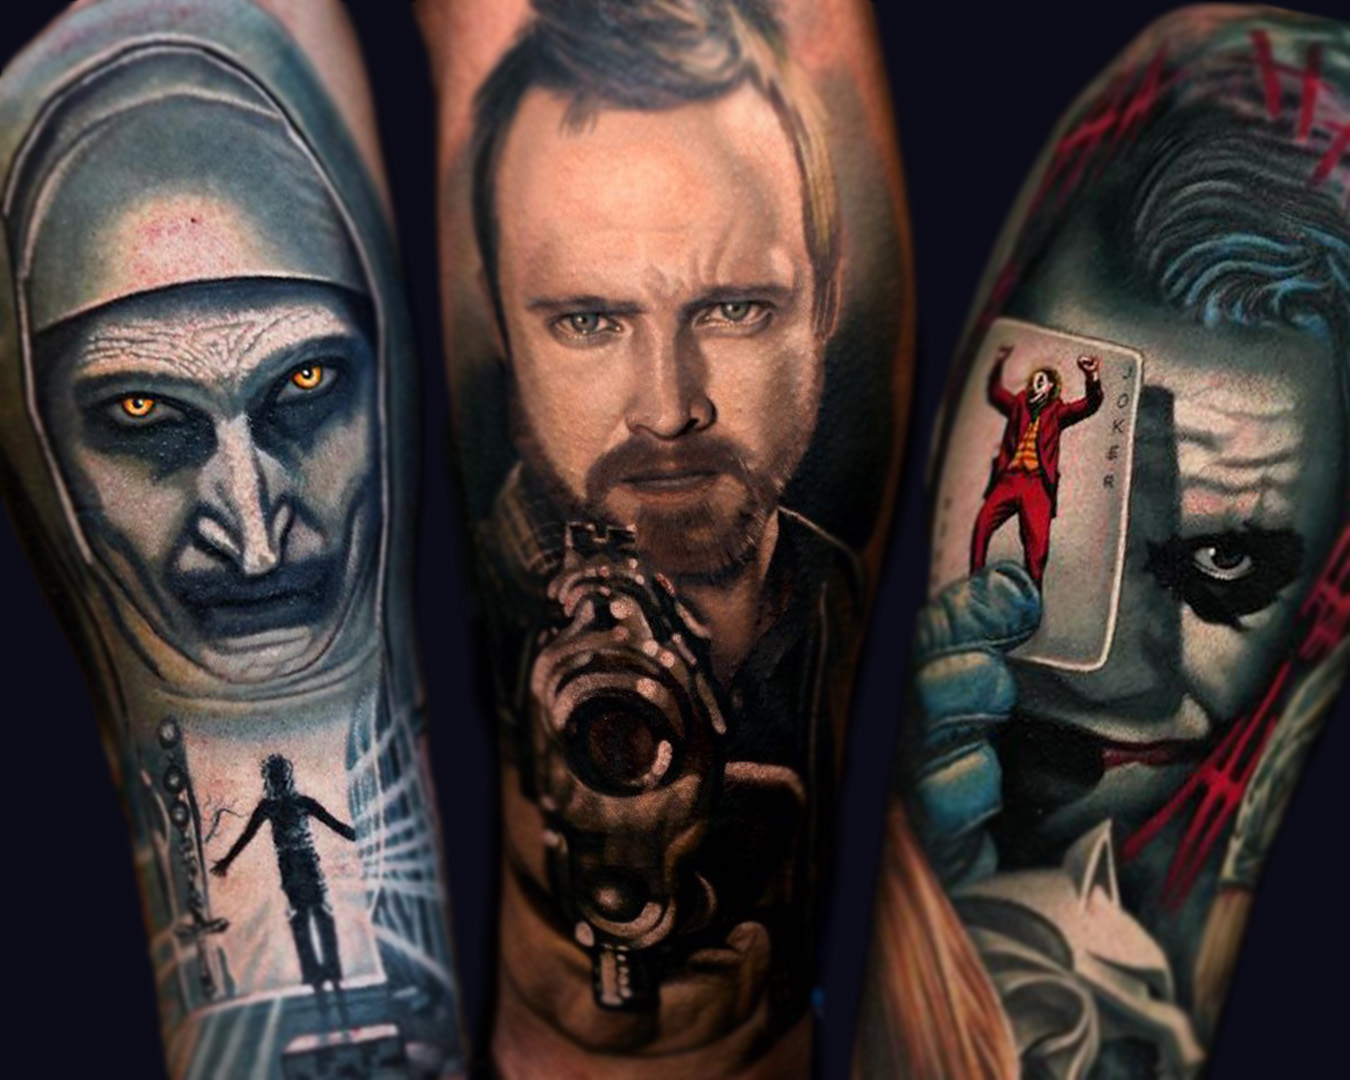 Color Realism Arm Tattoos, The Nun, Breaking Bad, The Joker, By Nikko Hurtado